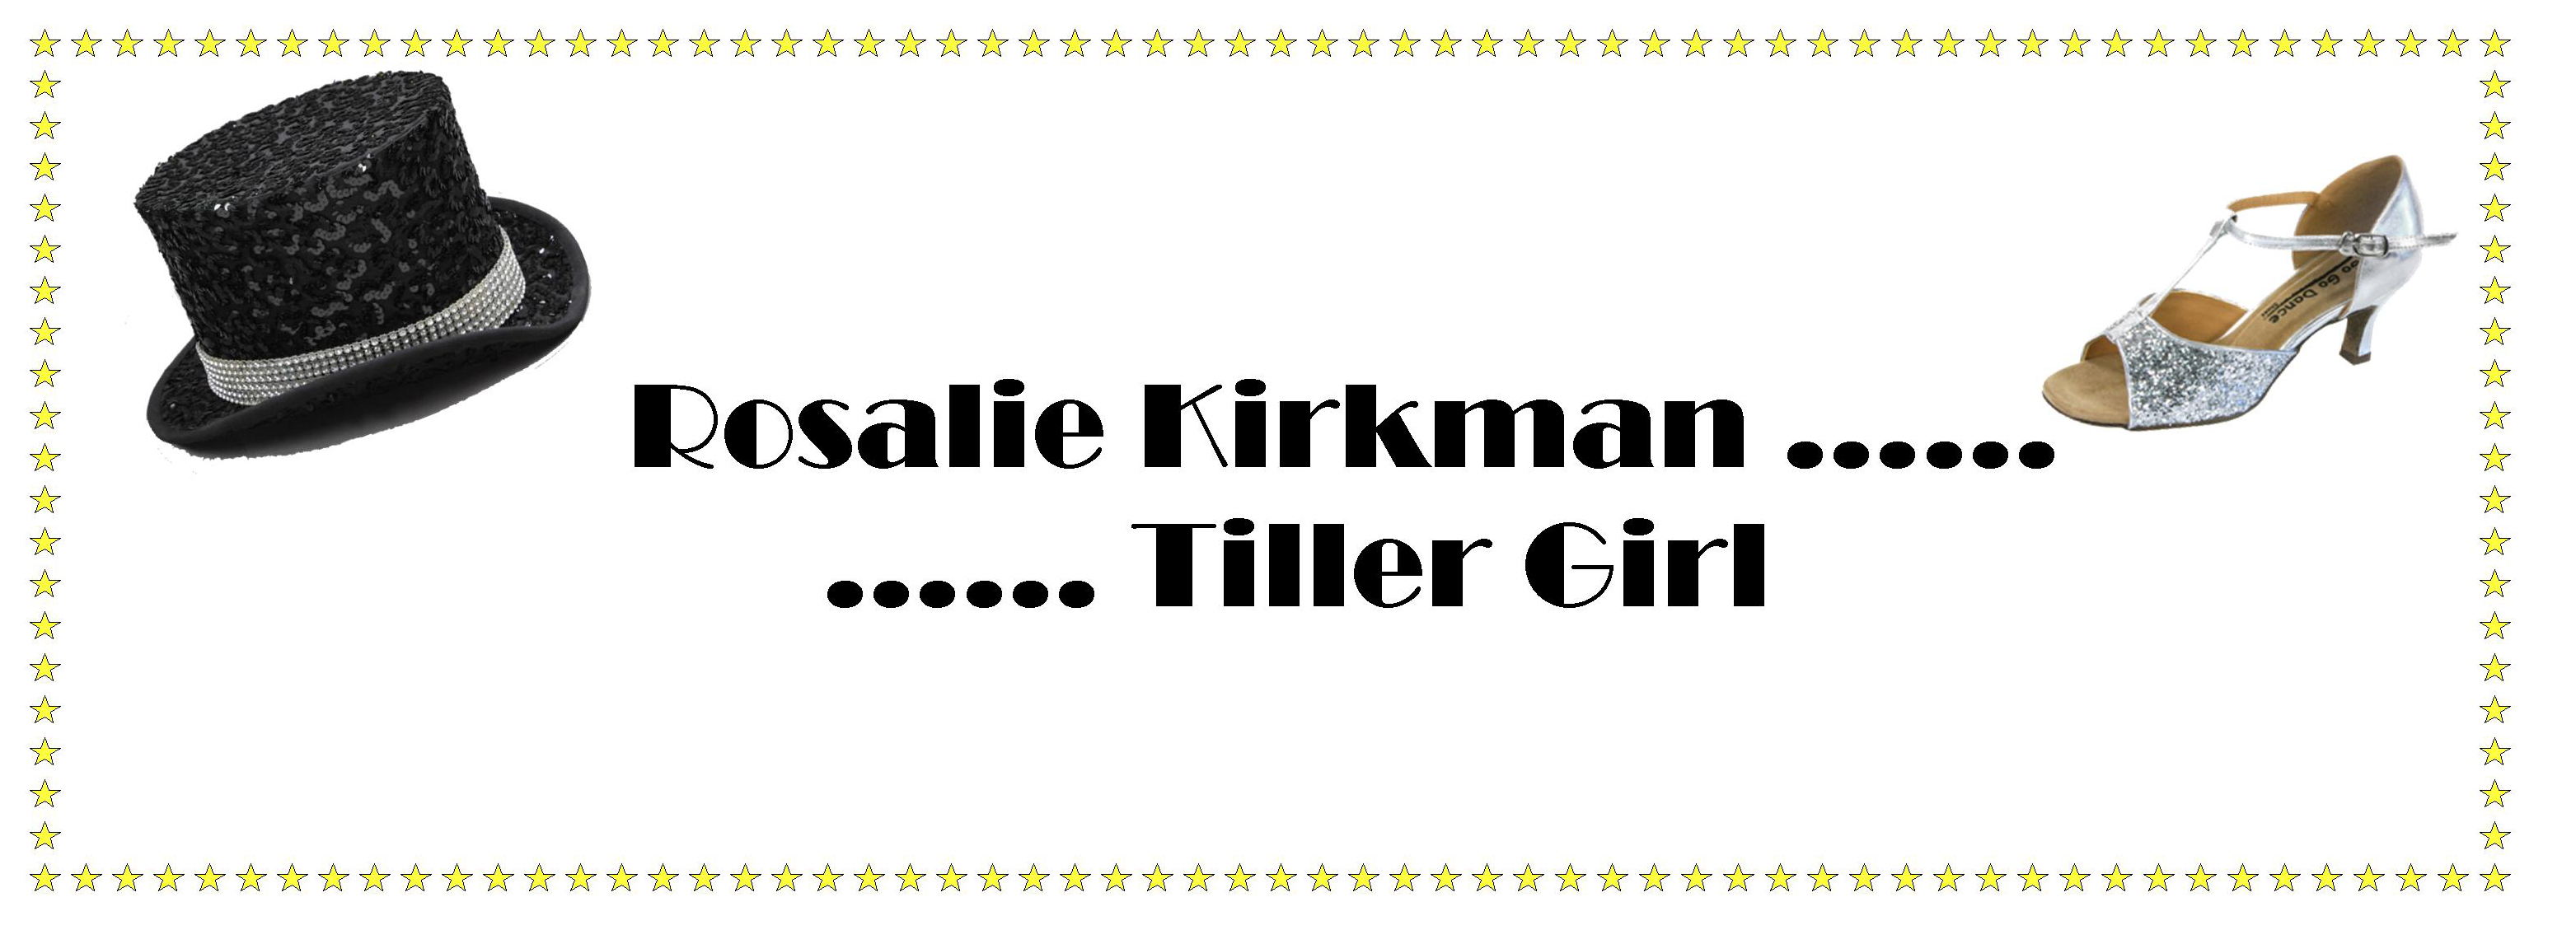 Rosalie Kirkman Tiller Girl